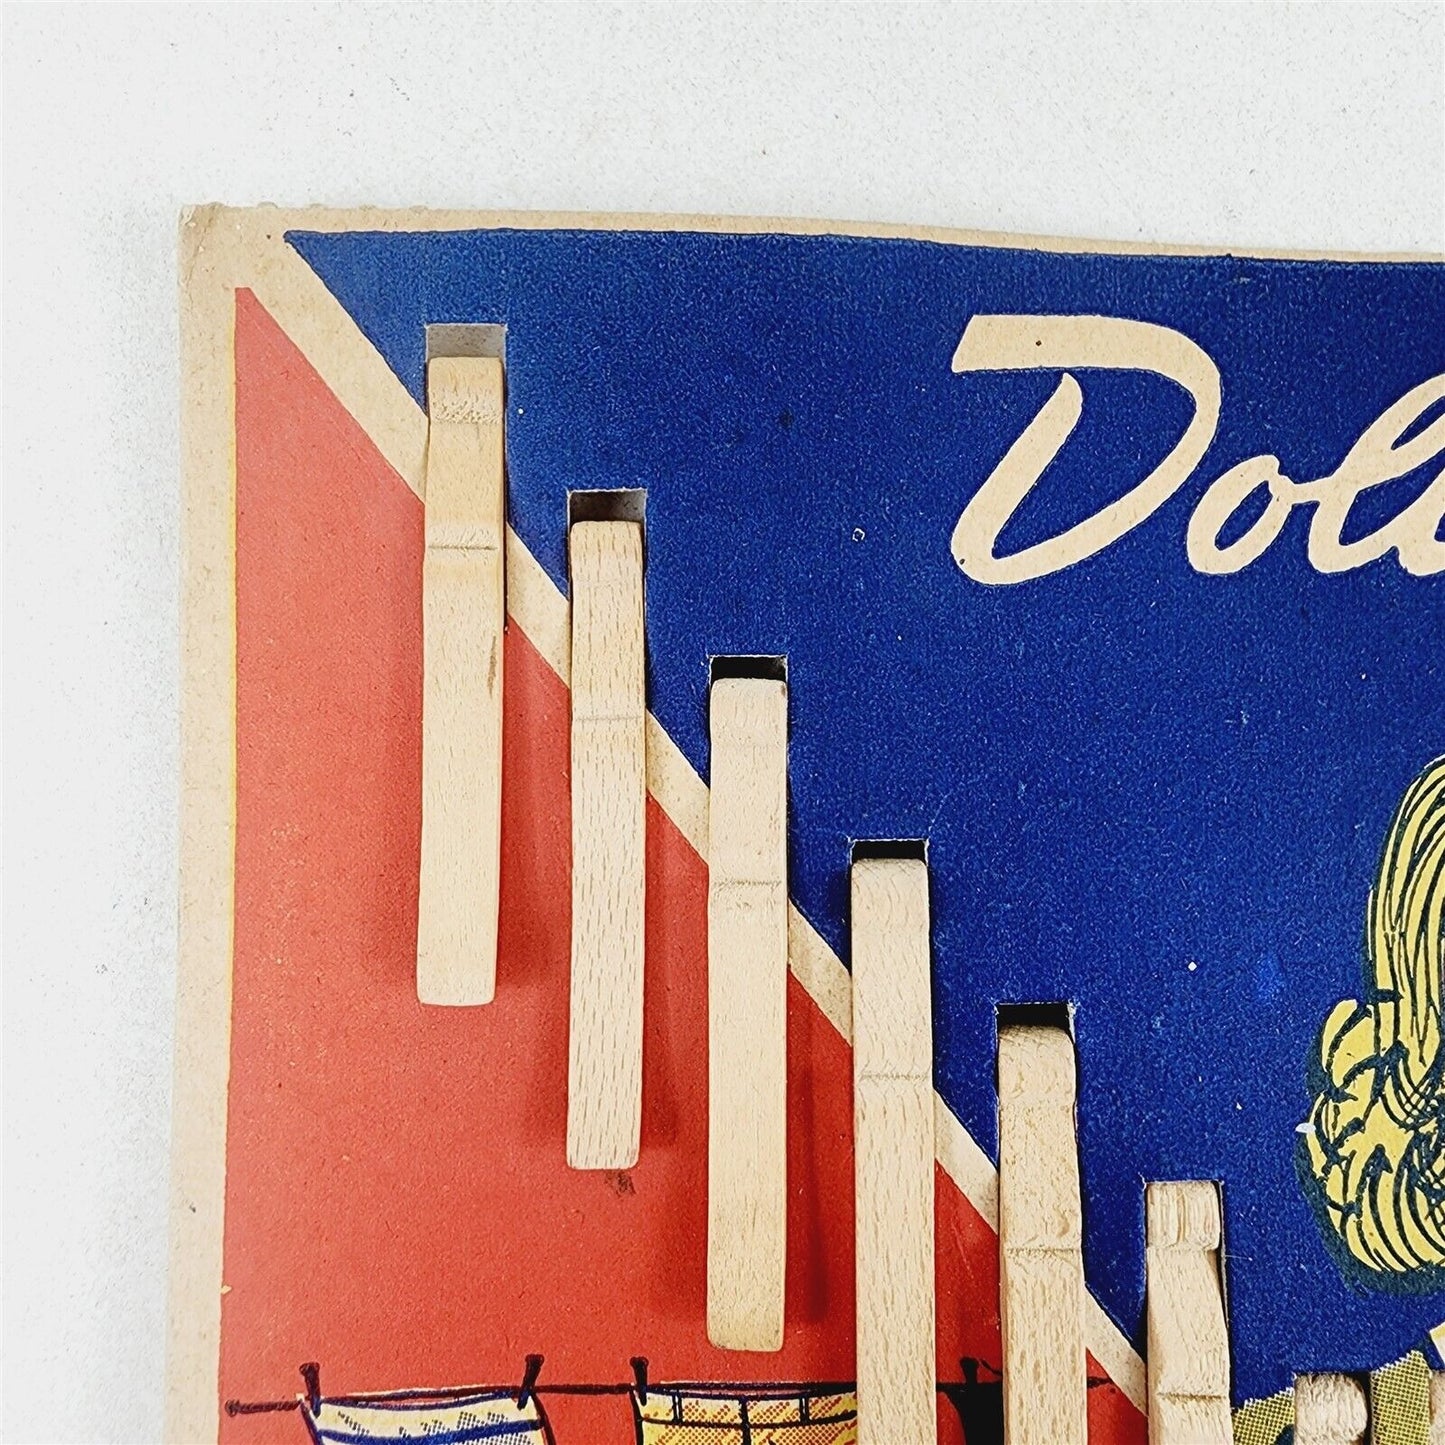 Vintage Dolly Pins 18 Wood Clothes Pins Clothespins Original Card No. 180 - #4